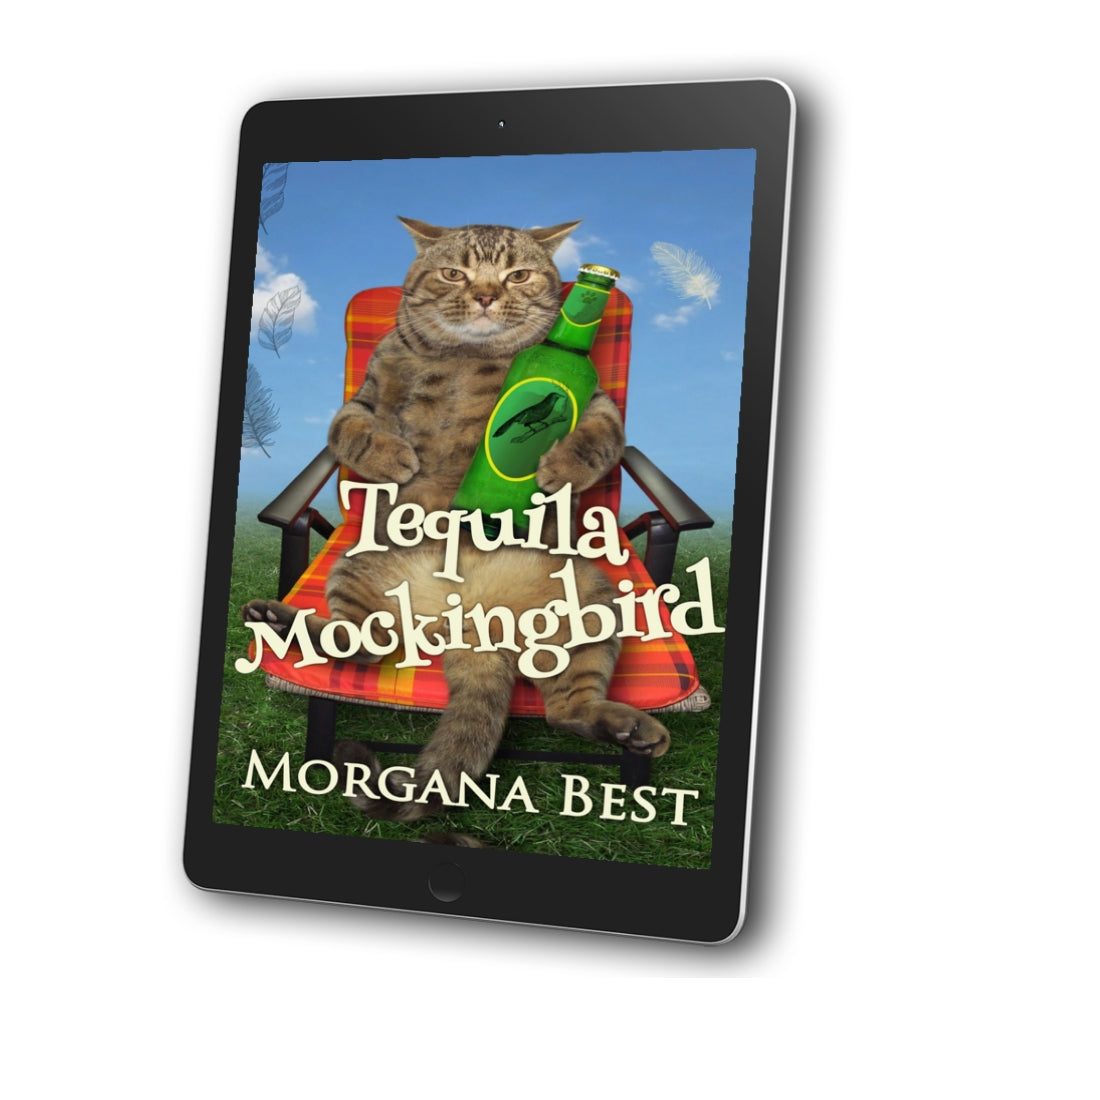 Tequila Mockingbird EBOOK cozy mystery morgana best